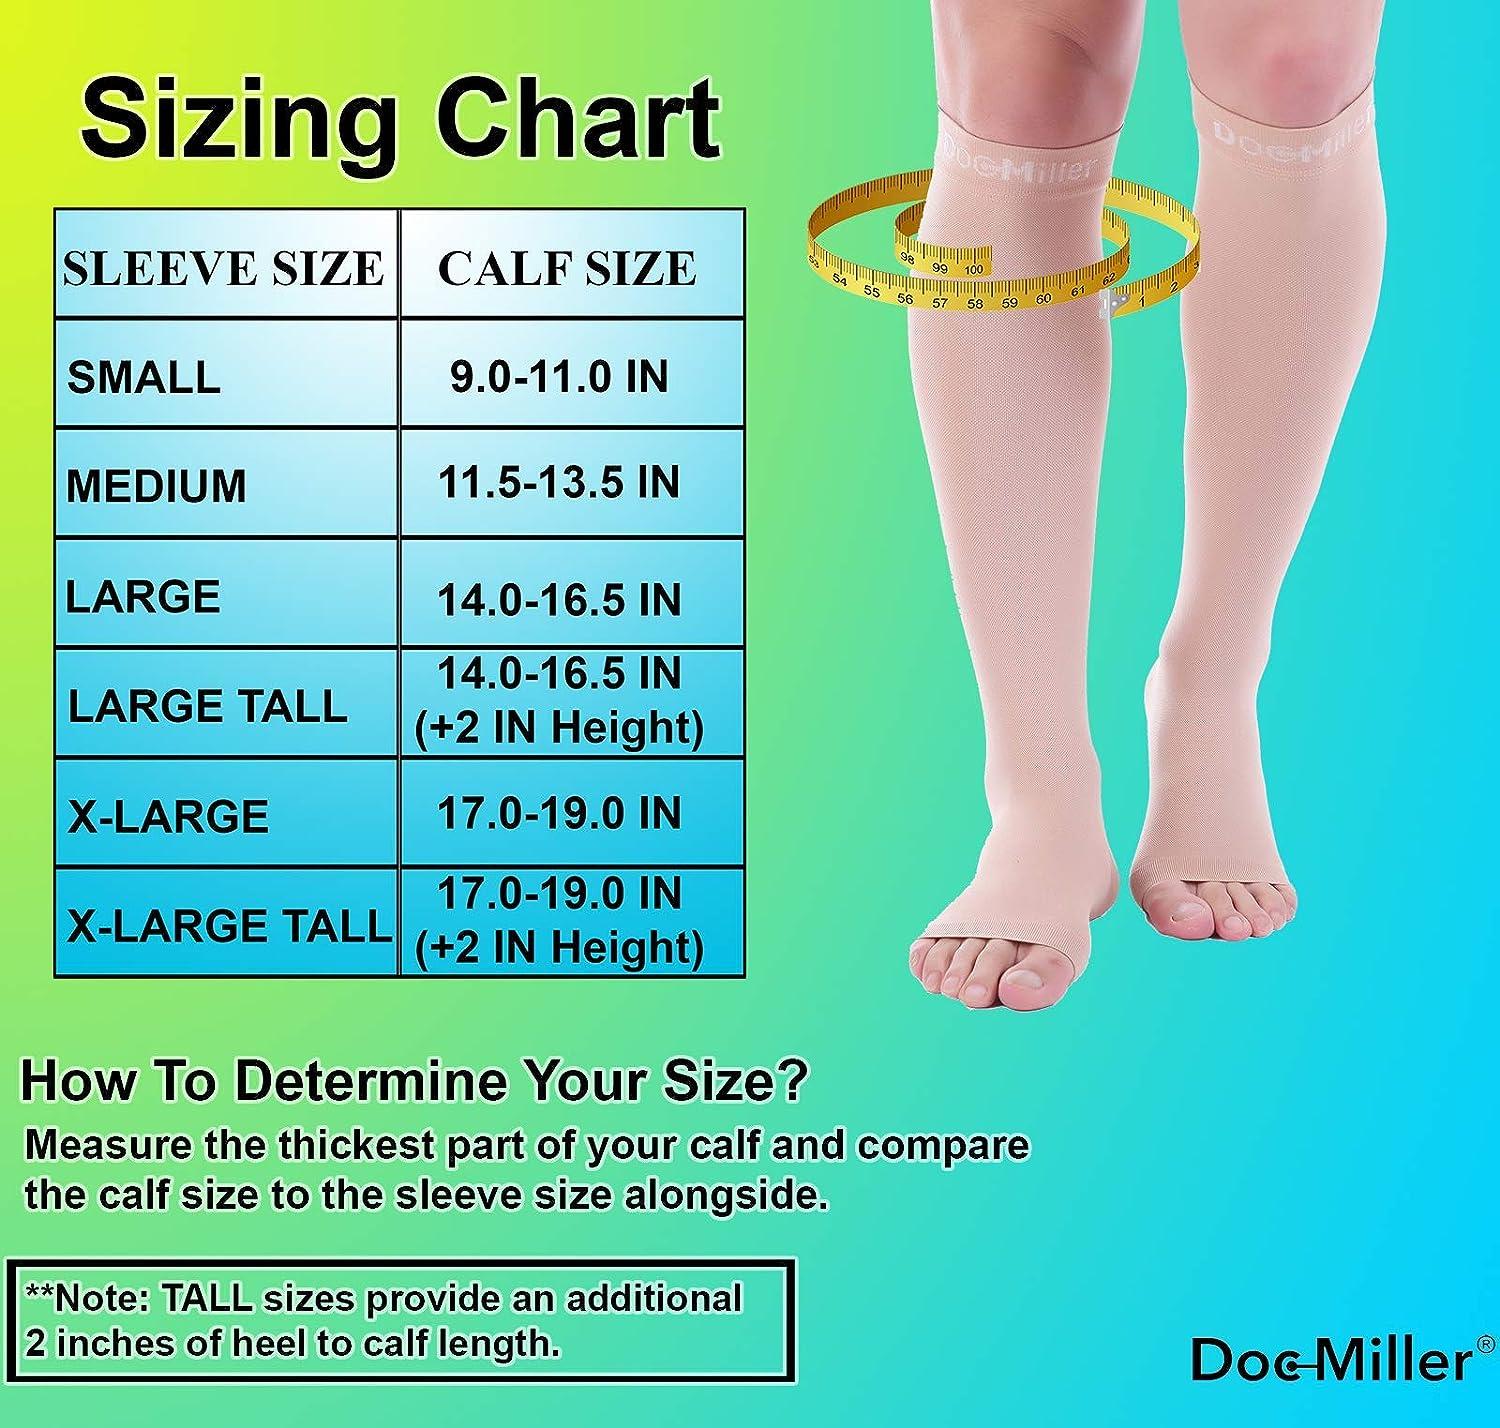 Doc Miller Premium Open Toe Compression Socks - 20-30mmHg